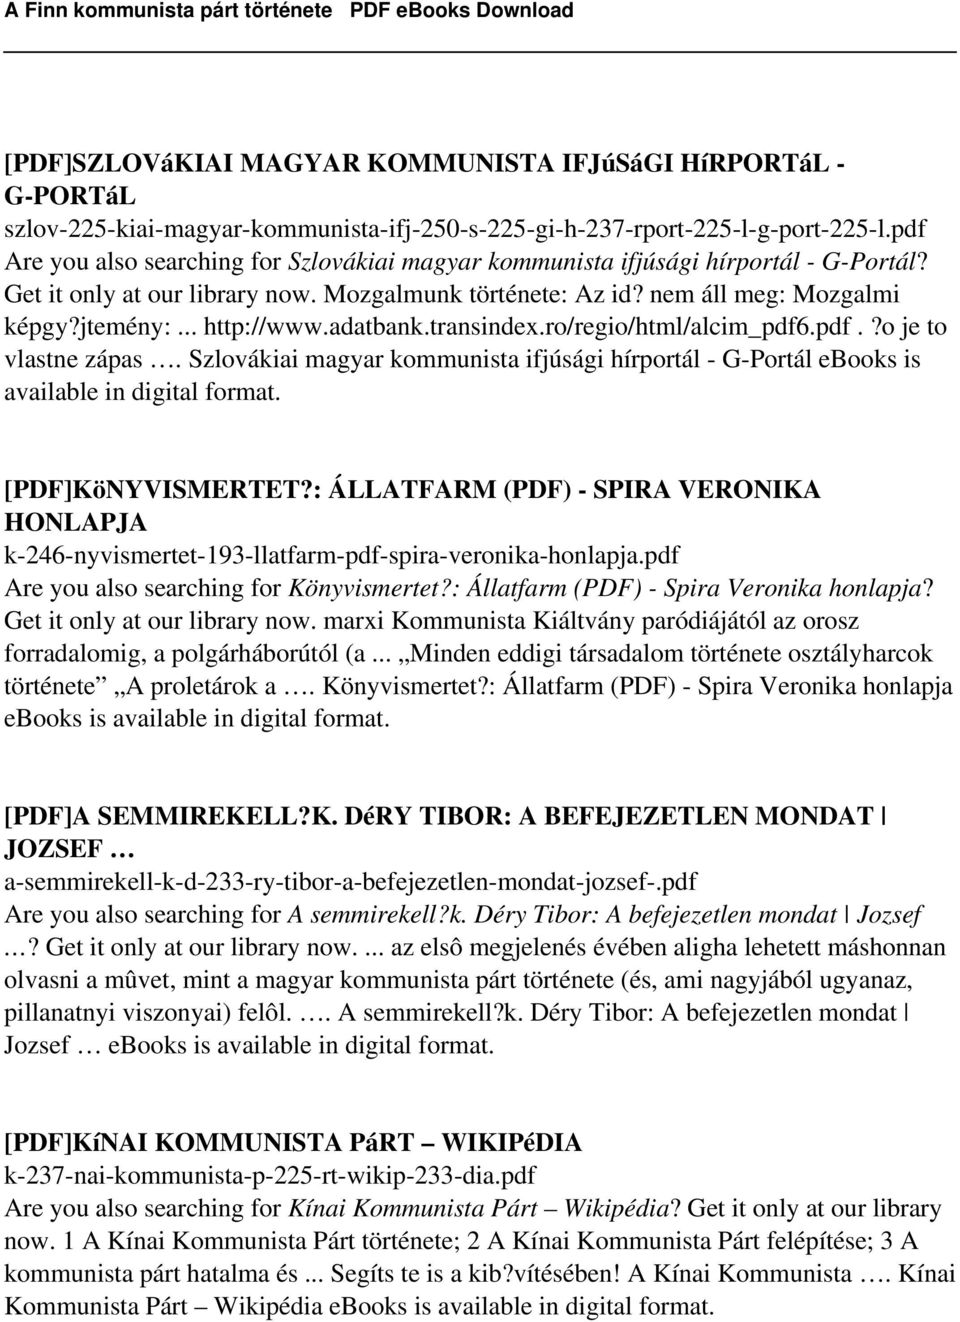 .. http://www.adatbank.transindex.ro/regio/html/alcim_pdf6.pdf.?o je to vlastne zápas. Szlovákiai magyar kommunista ifjúsági hírportál - G-Portál ebooks is [PDF]KöNYVISMERTET?